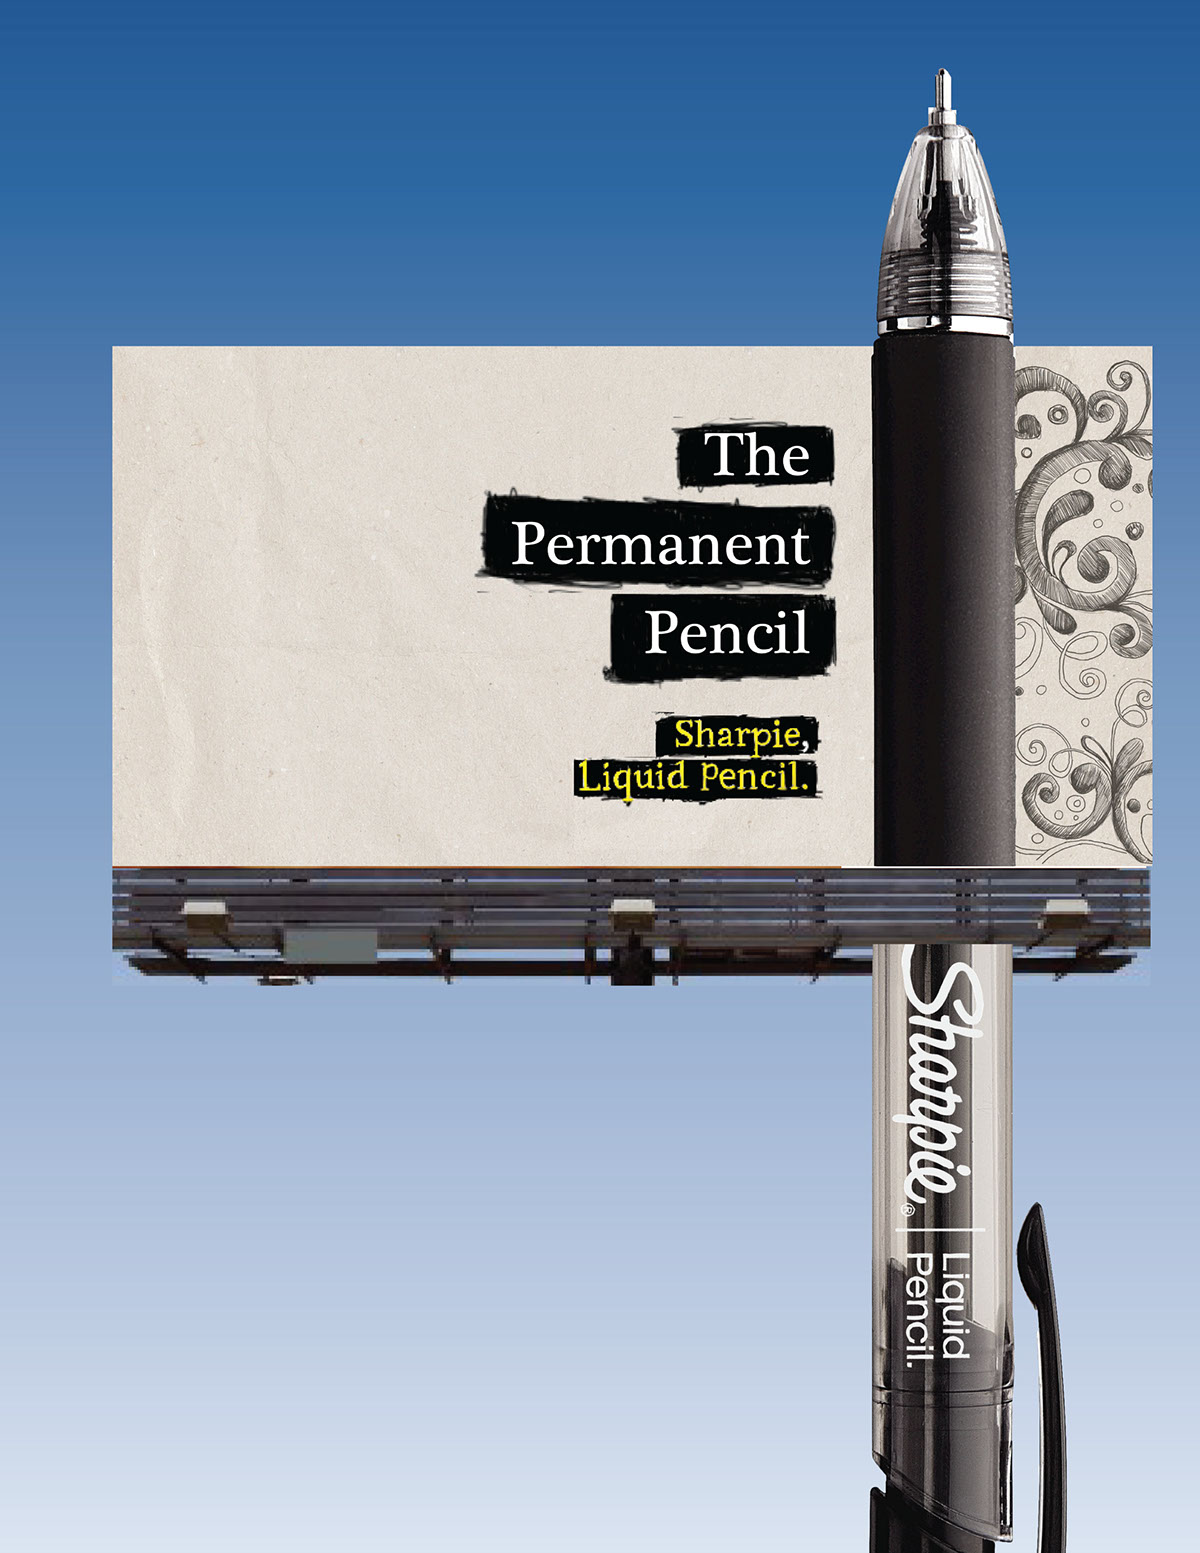 sharpie Liquid Pencil pencil pen savannah college of art and design